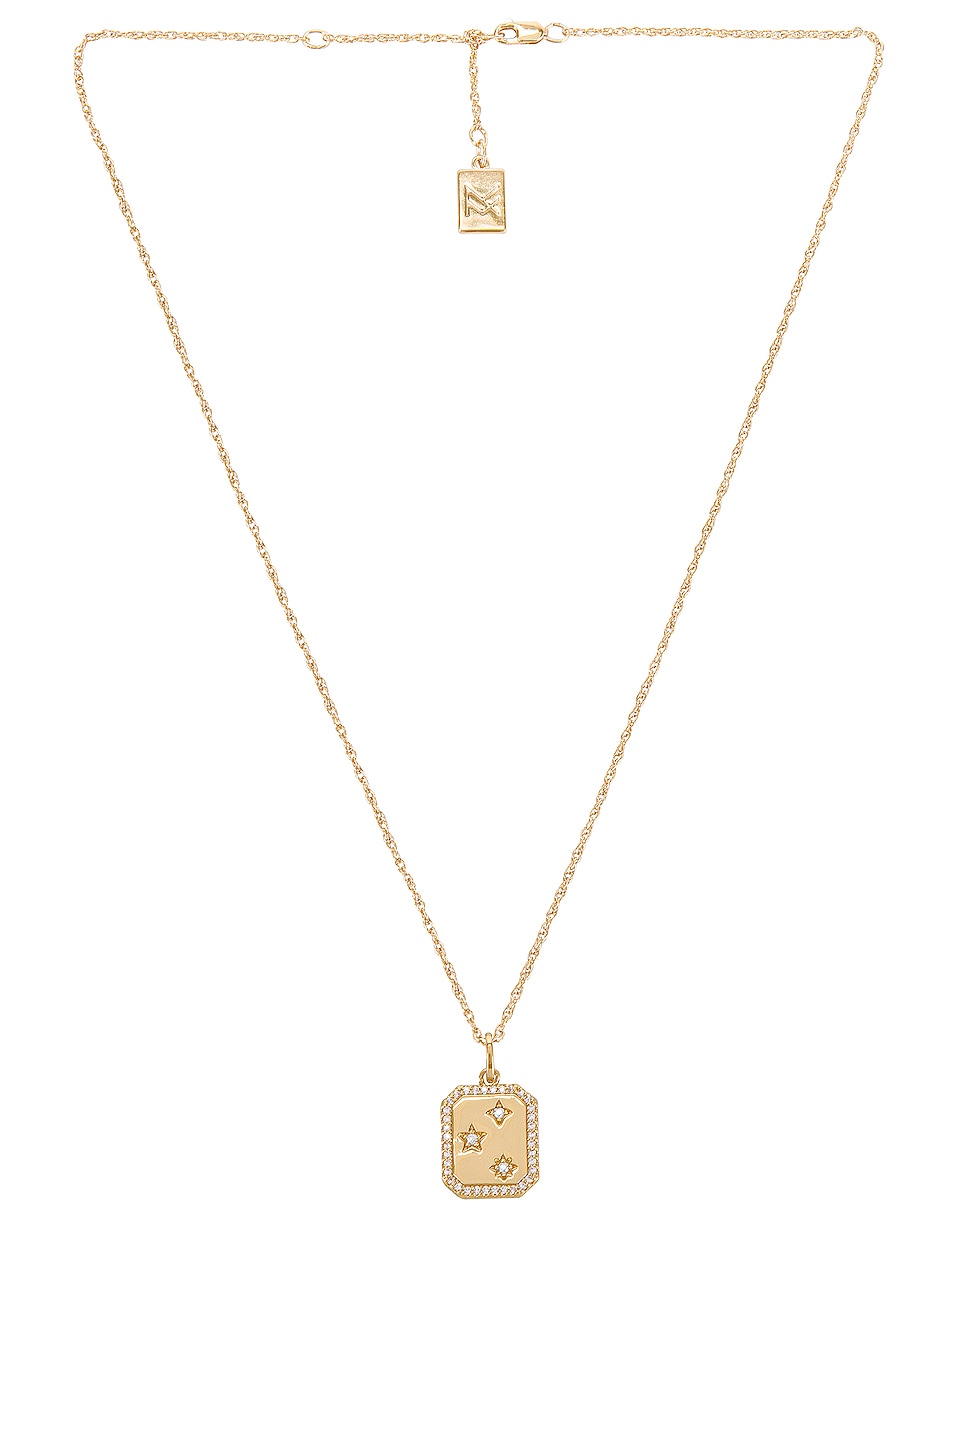 MIRANDA FRYE Atlas Charm and Eleanor Chain Necklace in Gold | REVOLVE